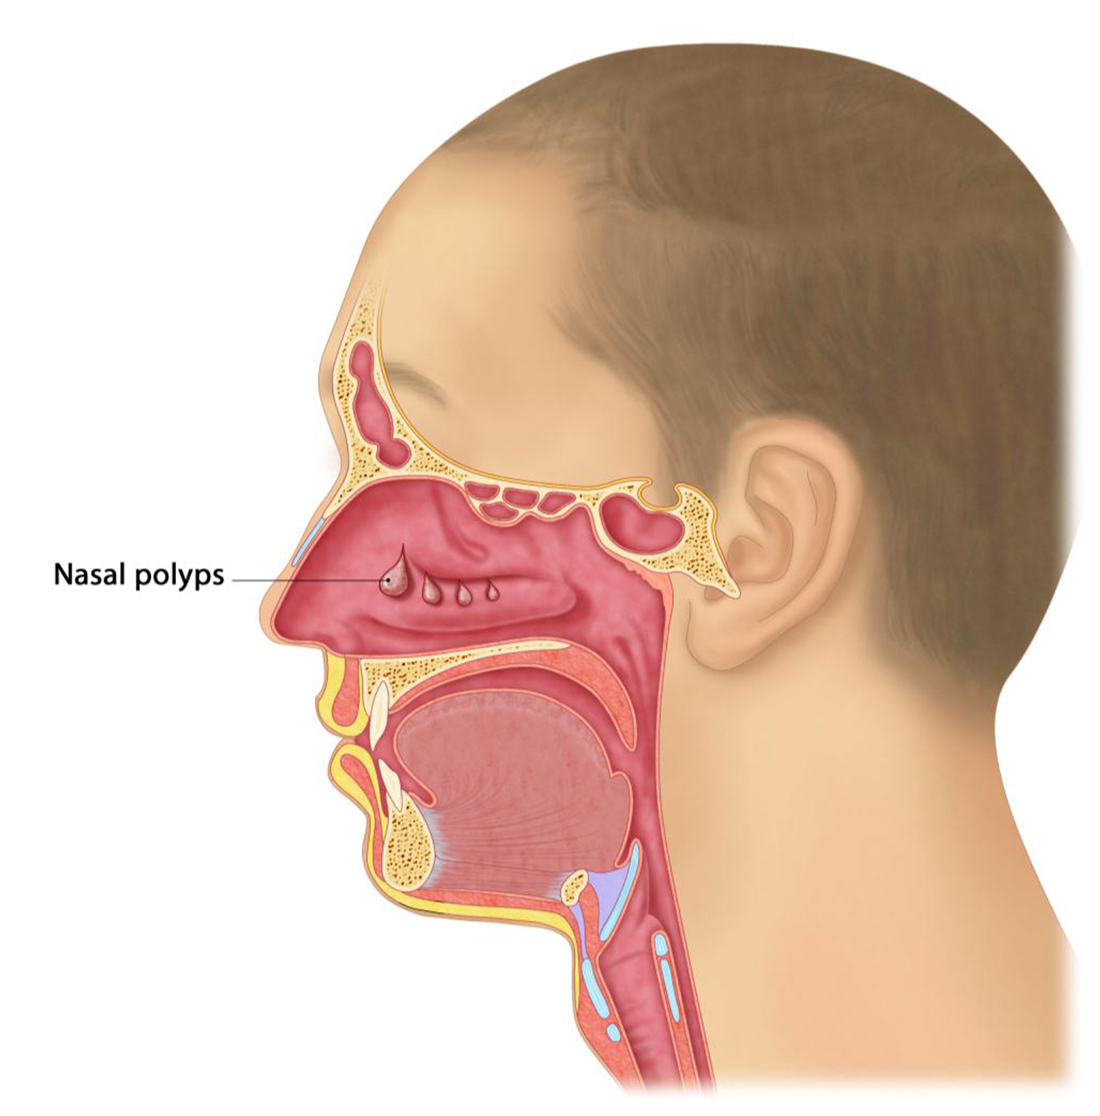 prolonged nasal congestion